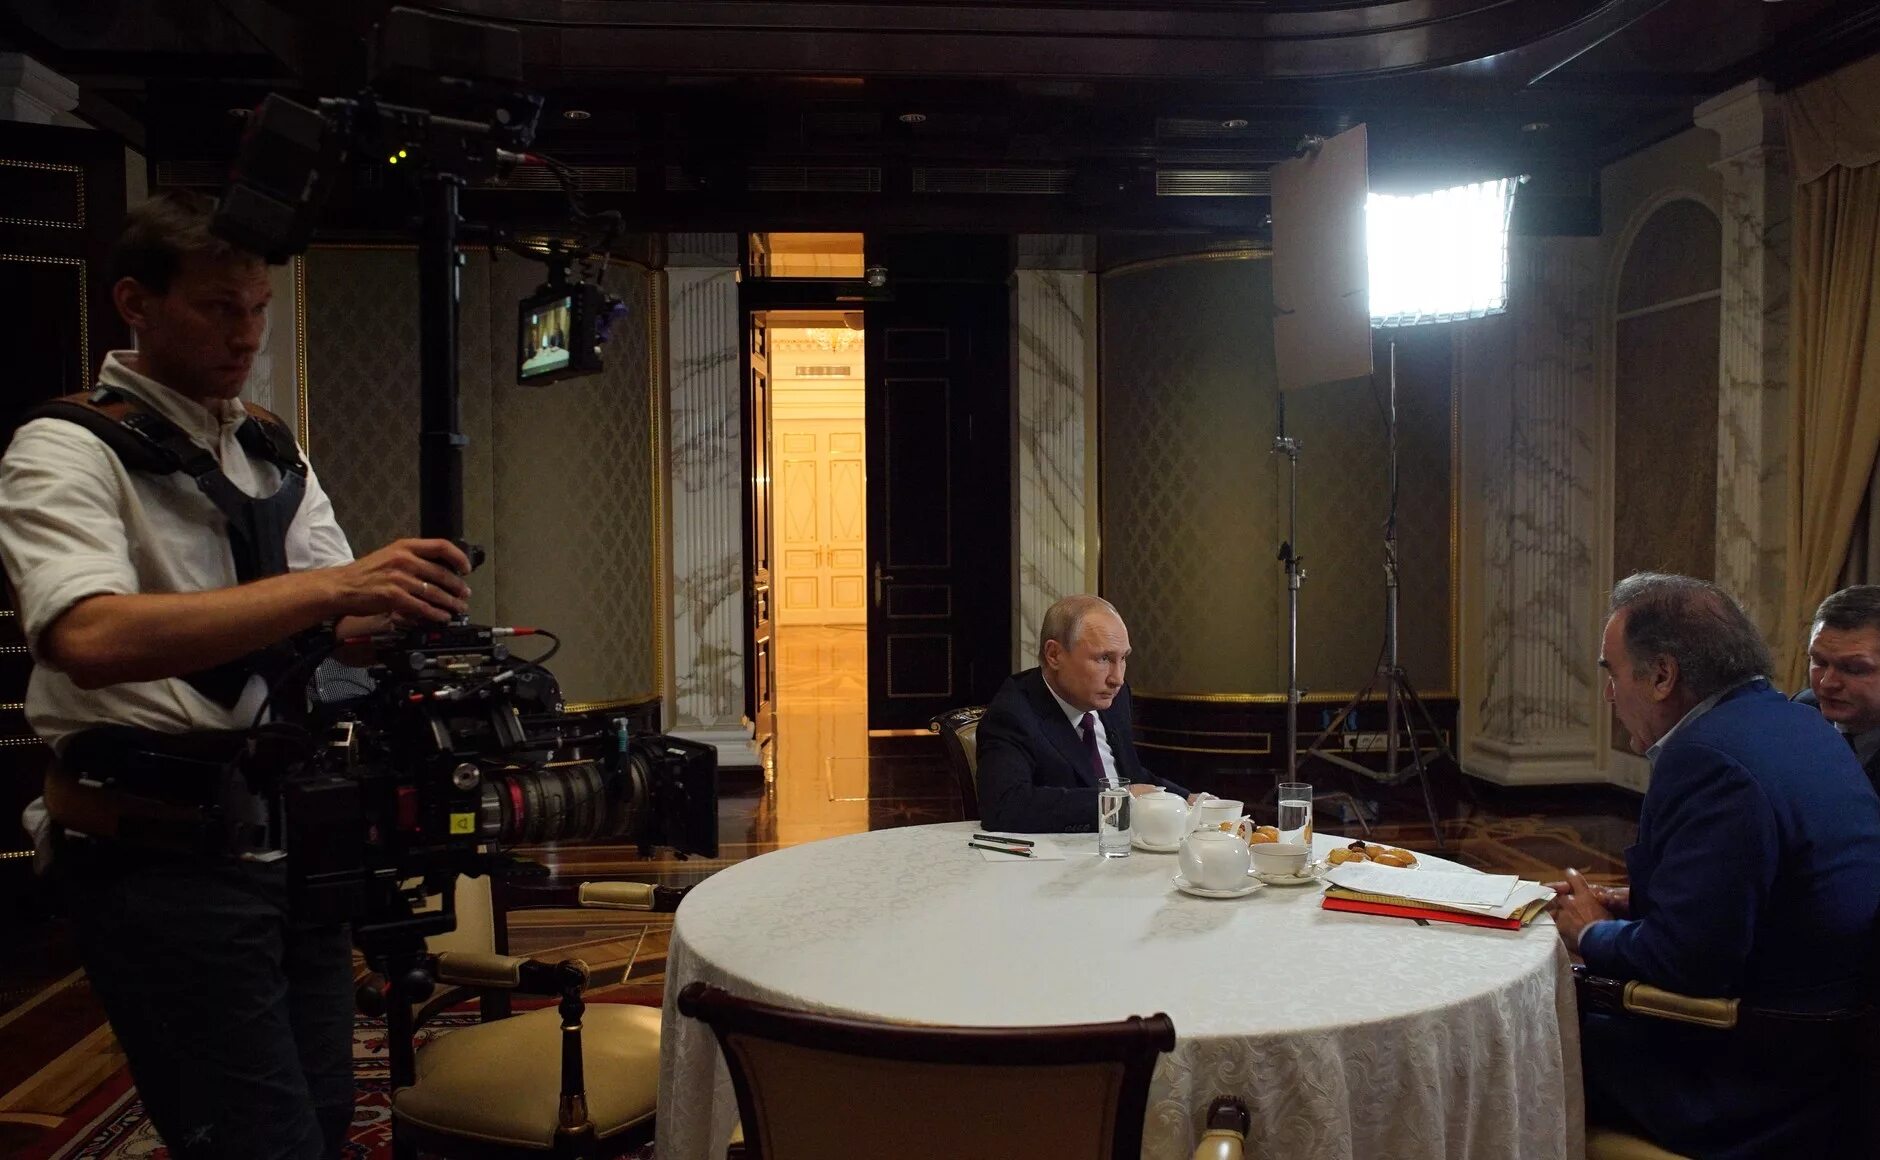 Оливер стоун интервью. Интервью с Путиным Оливер Стоун. Интервью Путина Оливеру Стоуну. Интервью Путина Оливеру Стоуну 2022.